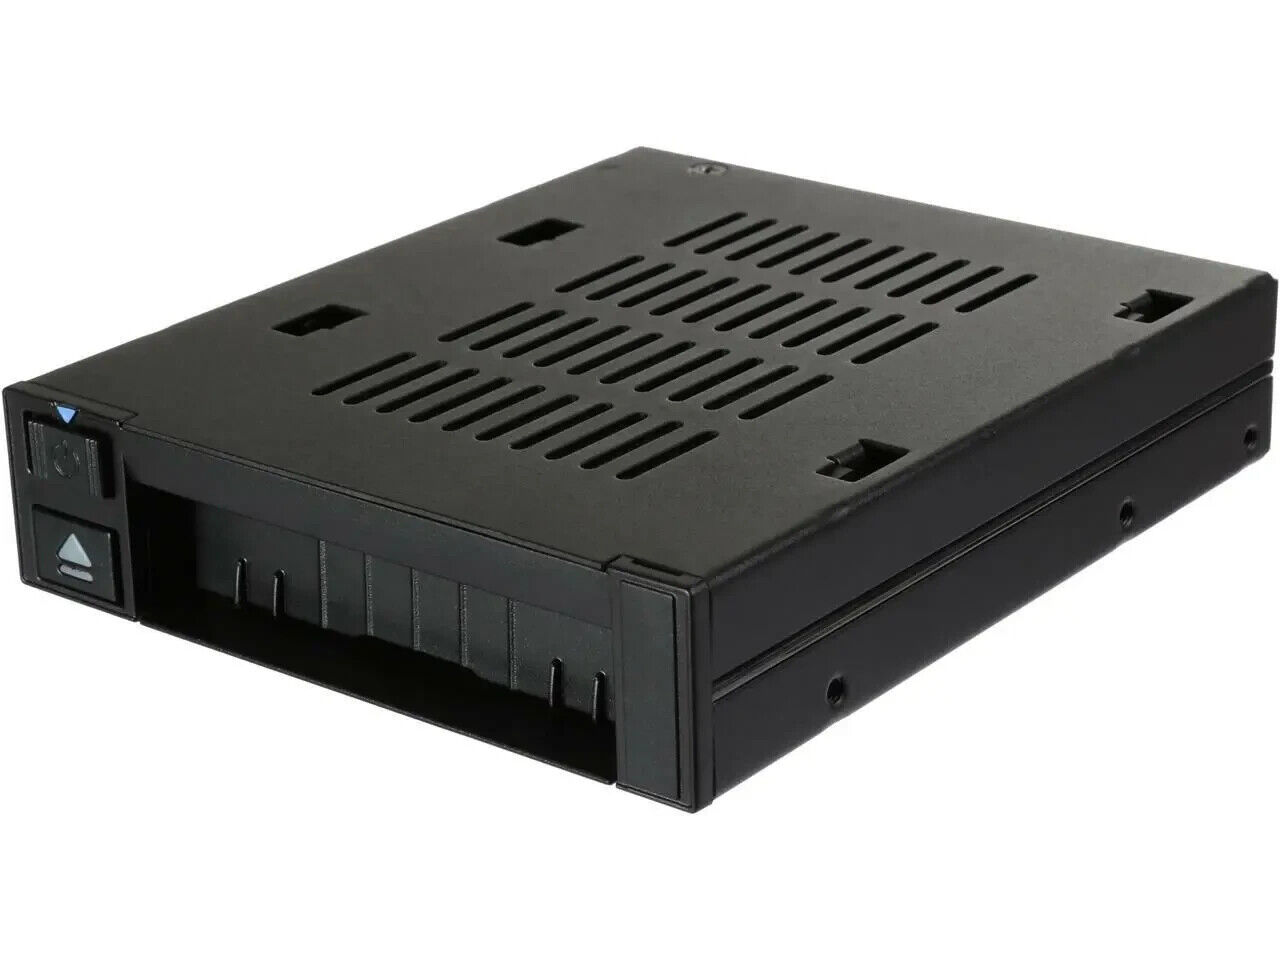 ICY DOCK MB521SP-B flexiDOCK 2.5” SSD Dock Trayless Hot-Swap SATA Mobile Rack